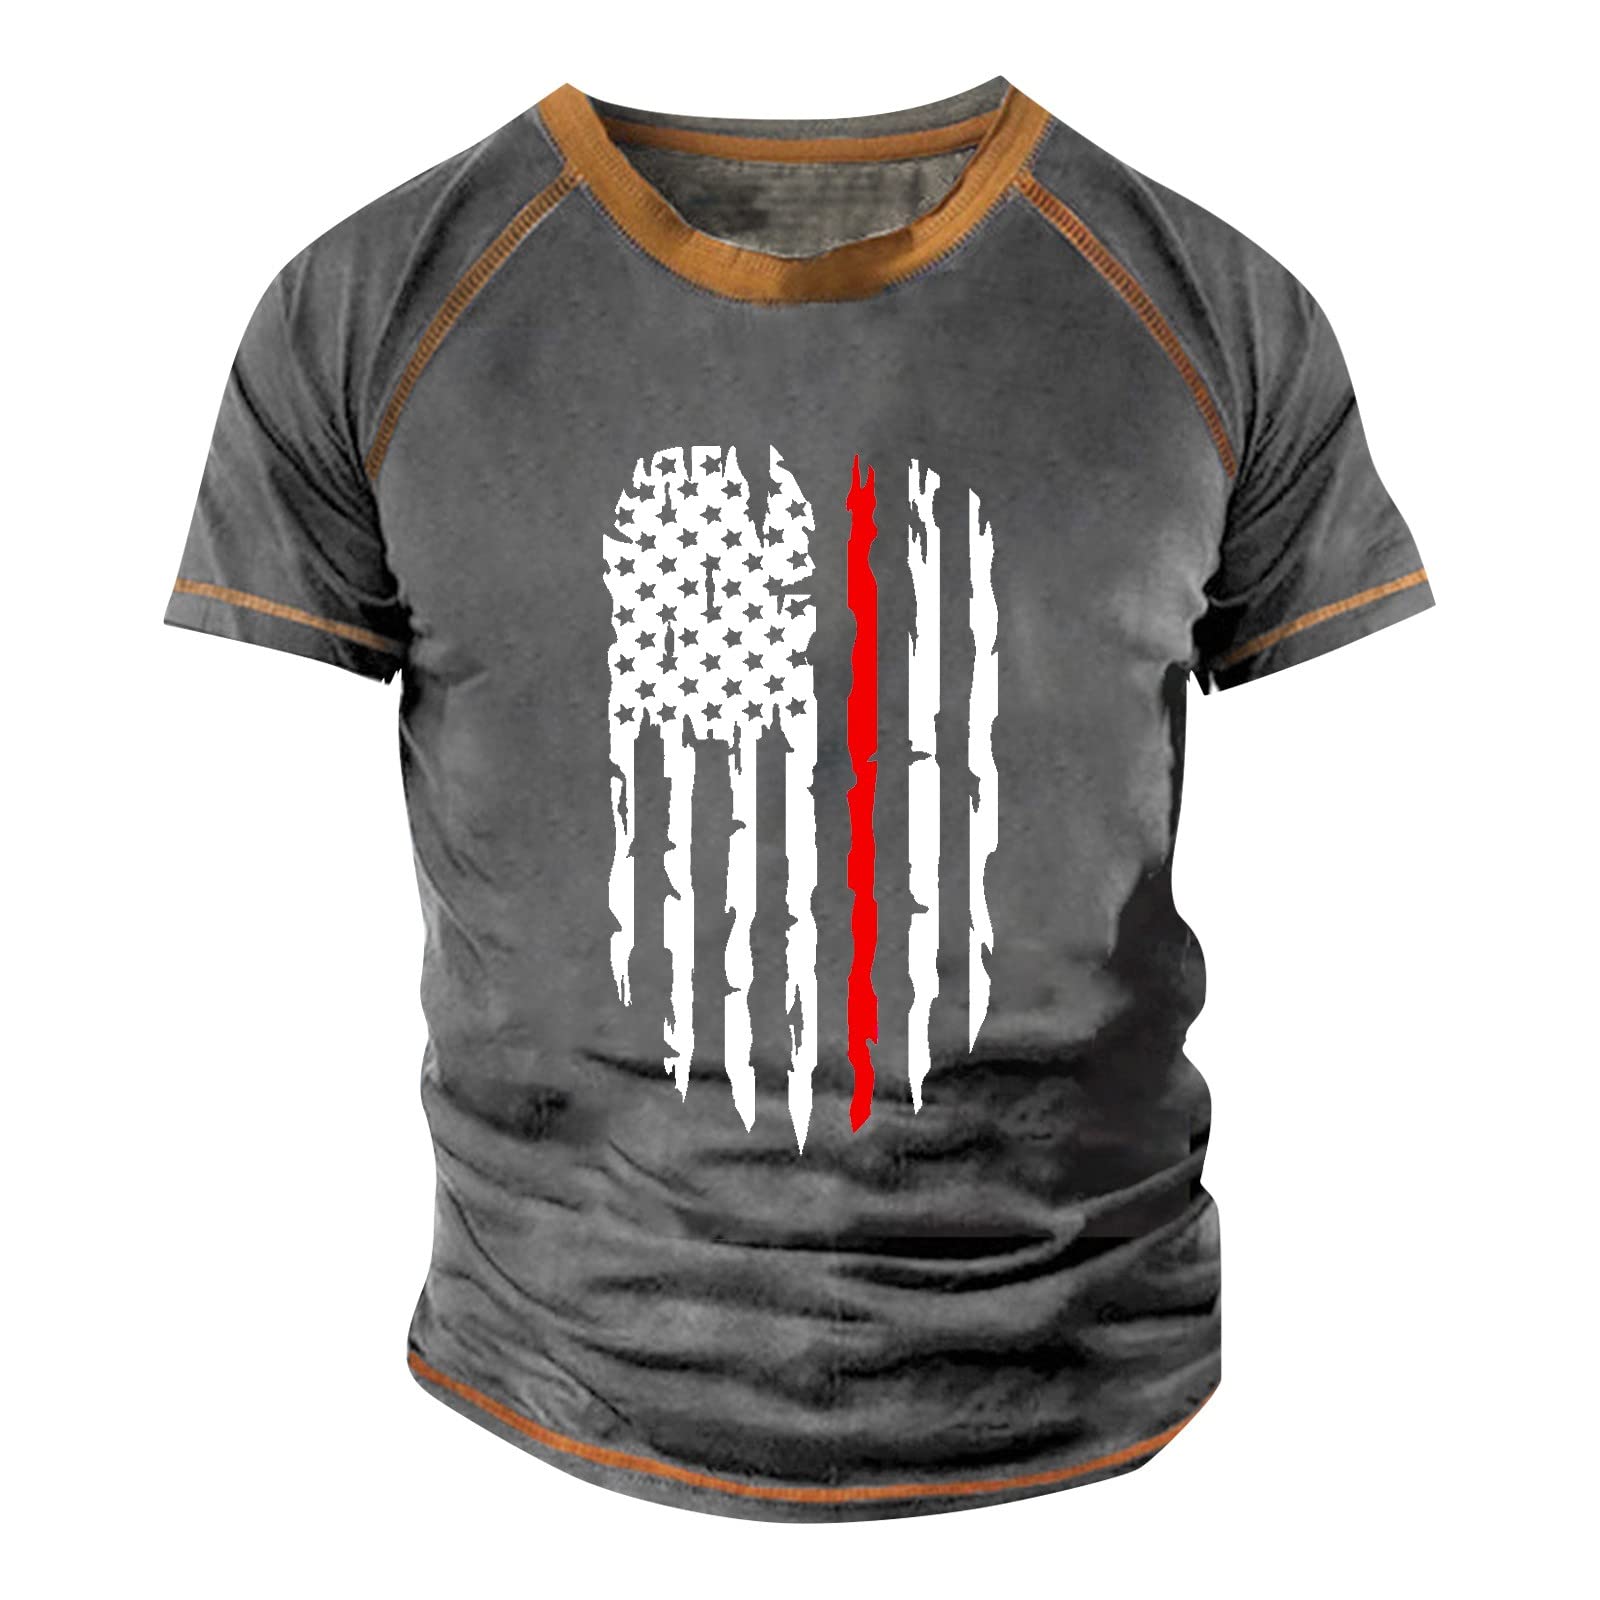 XIAXOGOOL T Shirt Men Independence Day Shirts Graphic Tee Big and Tall Distressed American Flag Print Shirt Vintage T Shirts